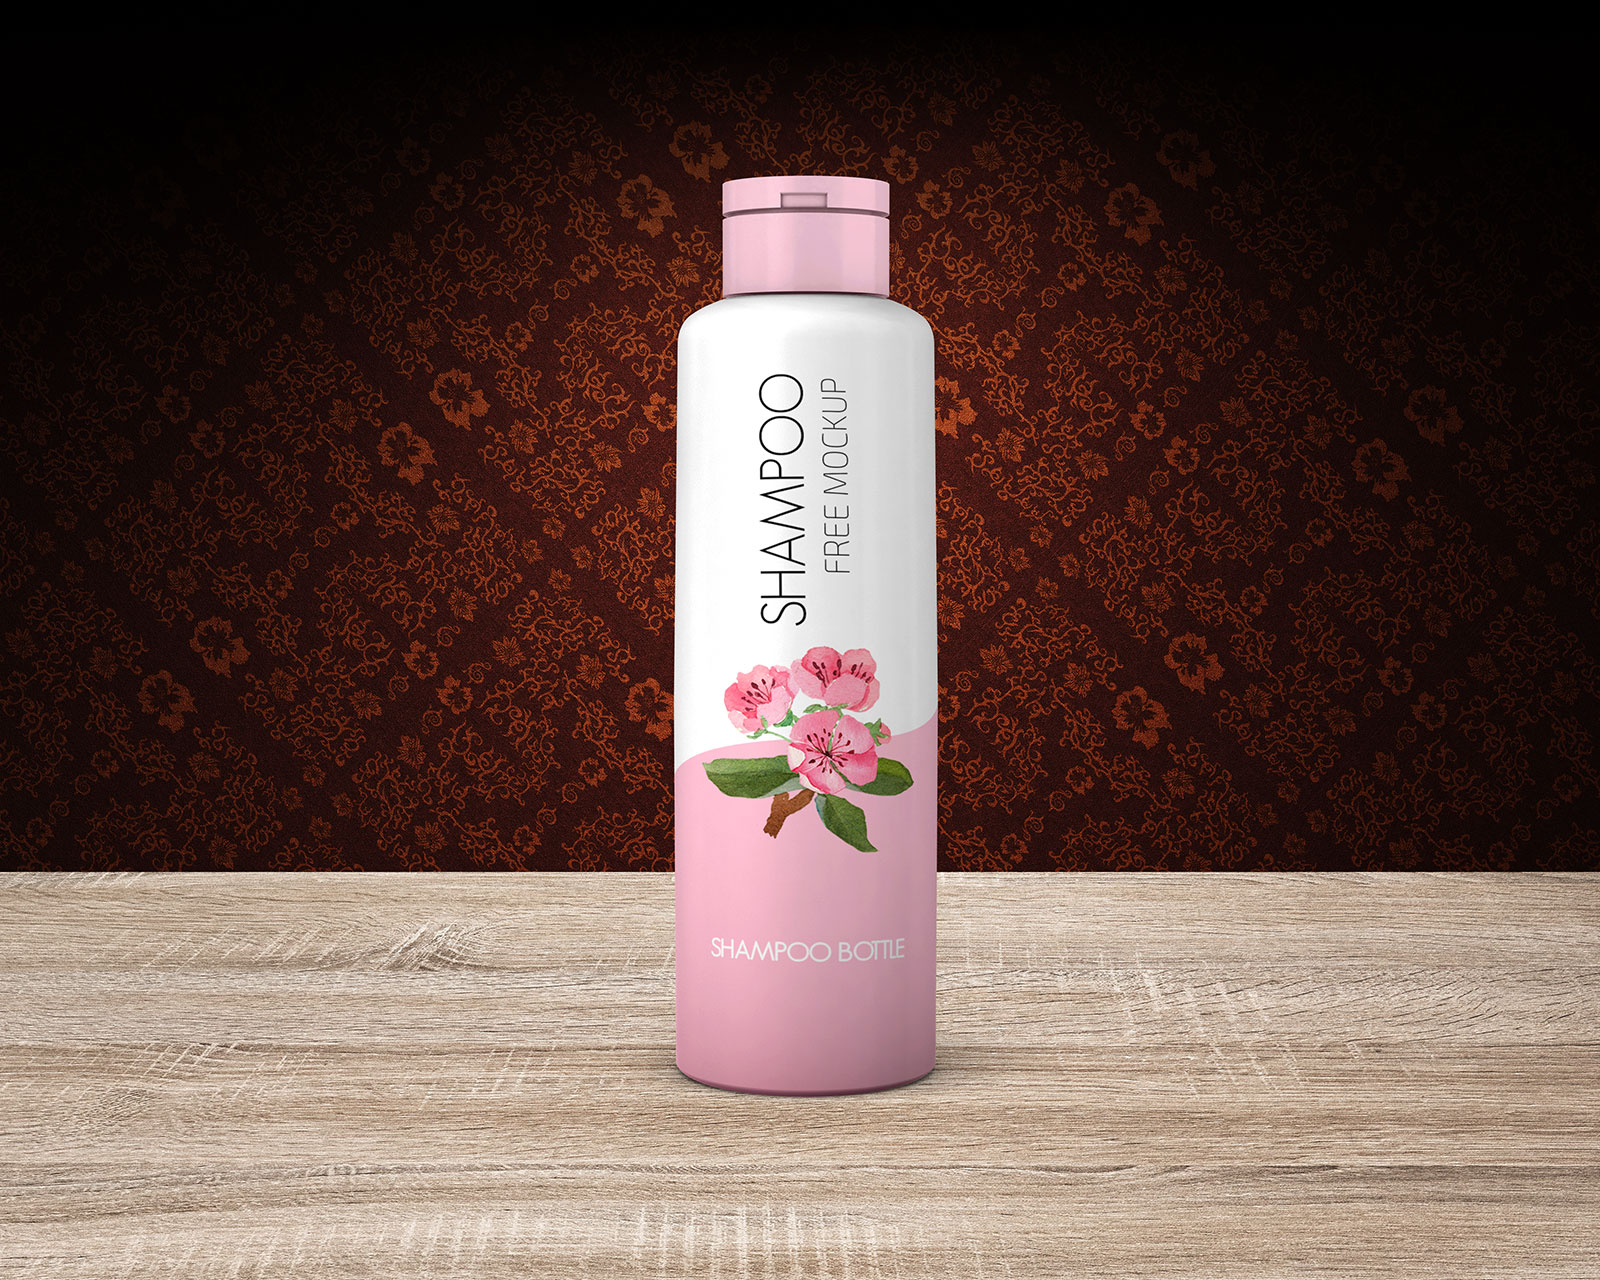 Free-Cosmetic-Cream-Shampoo-Bottle-Mockup-PSD